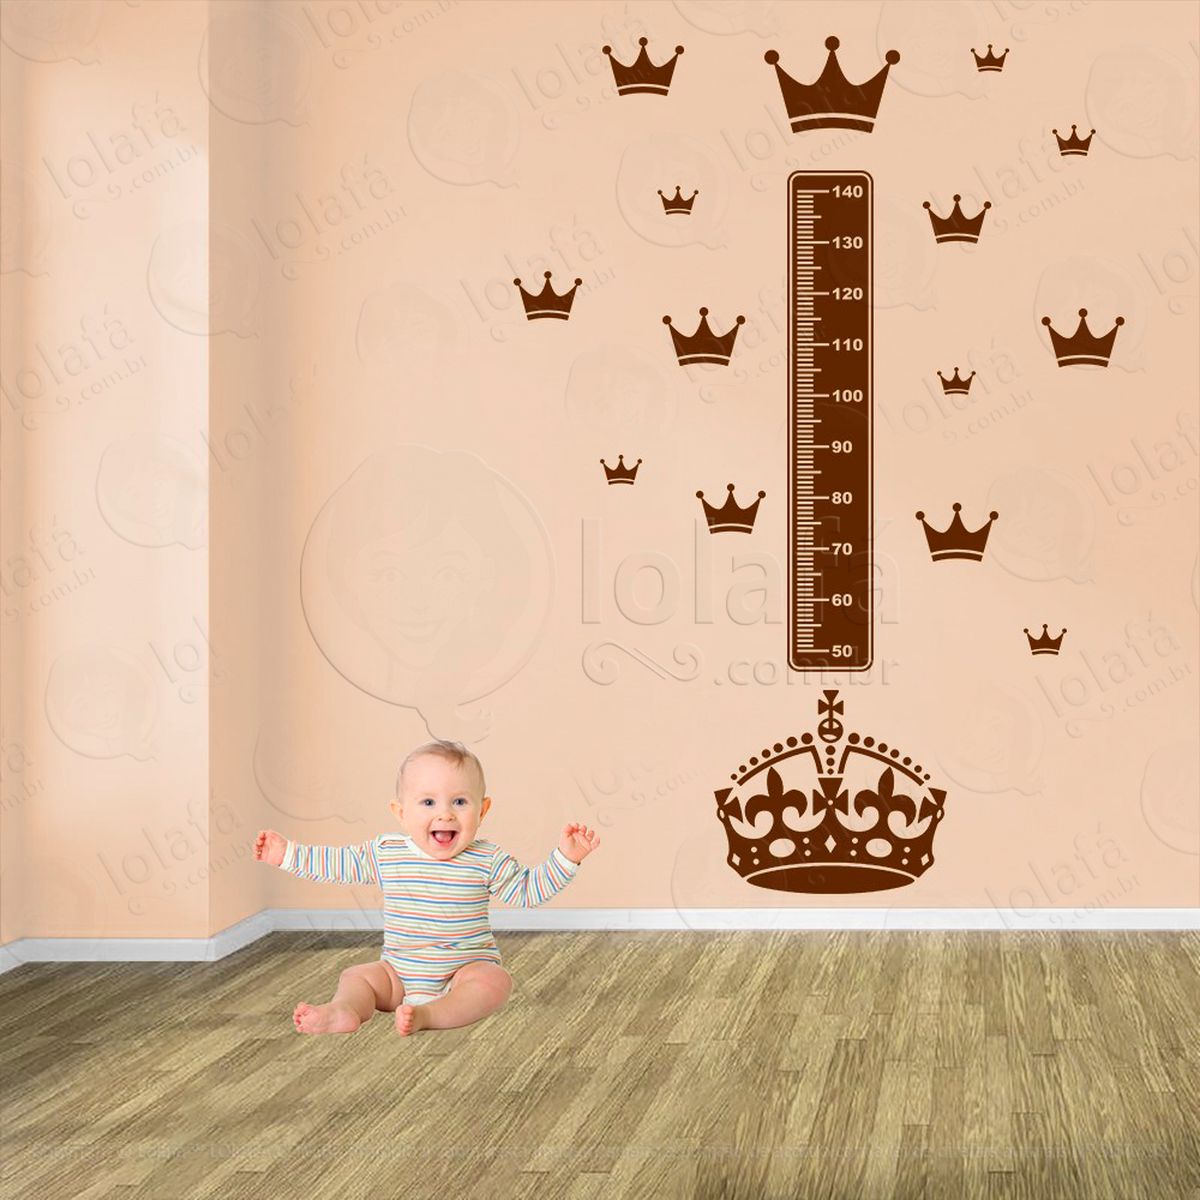 coroa e coroas adesivo régua de crescimento infantil, medidor de altura para quarto, porta e parede - mod:580